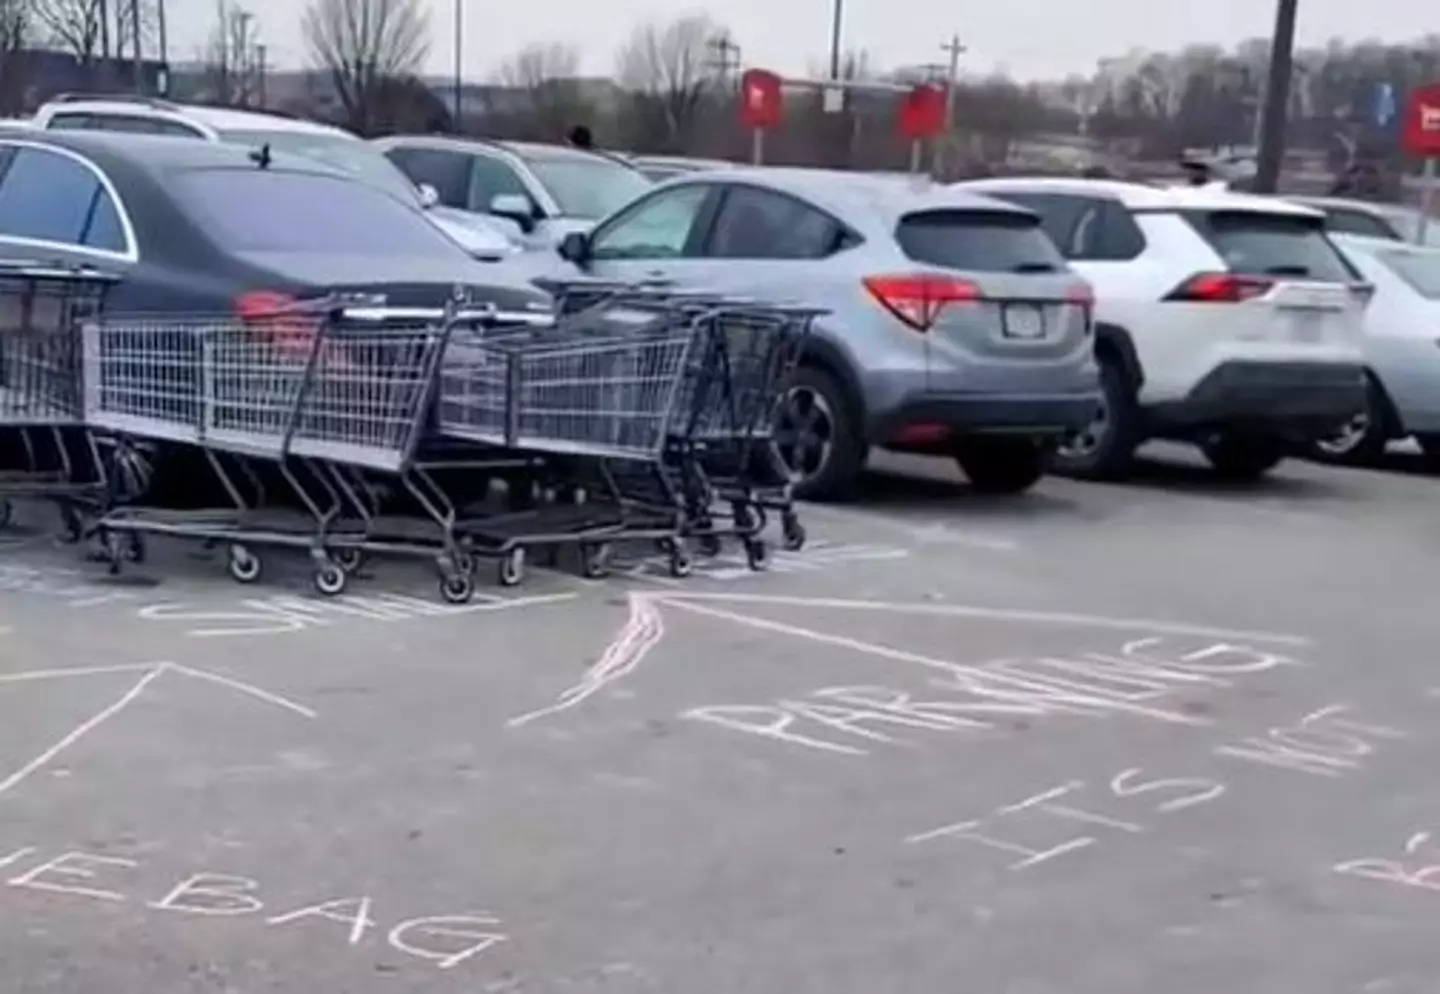 Shoppers take revenge on driver (